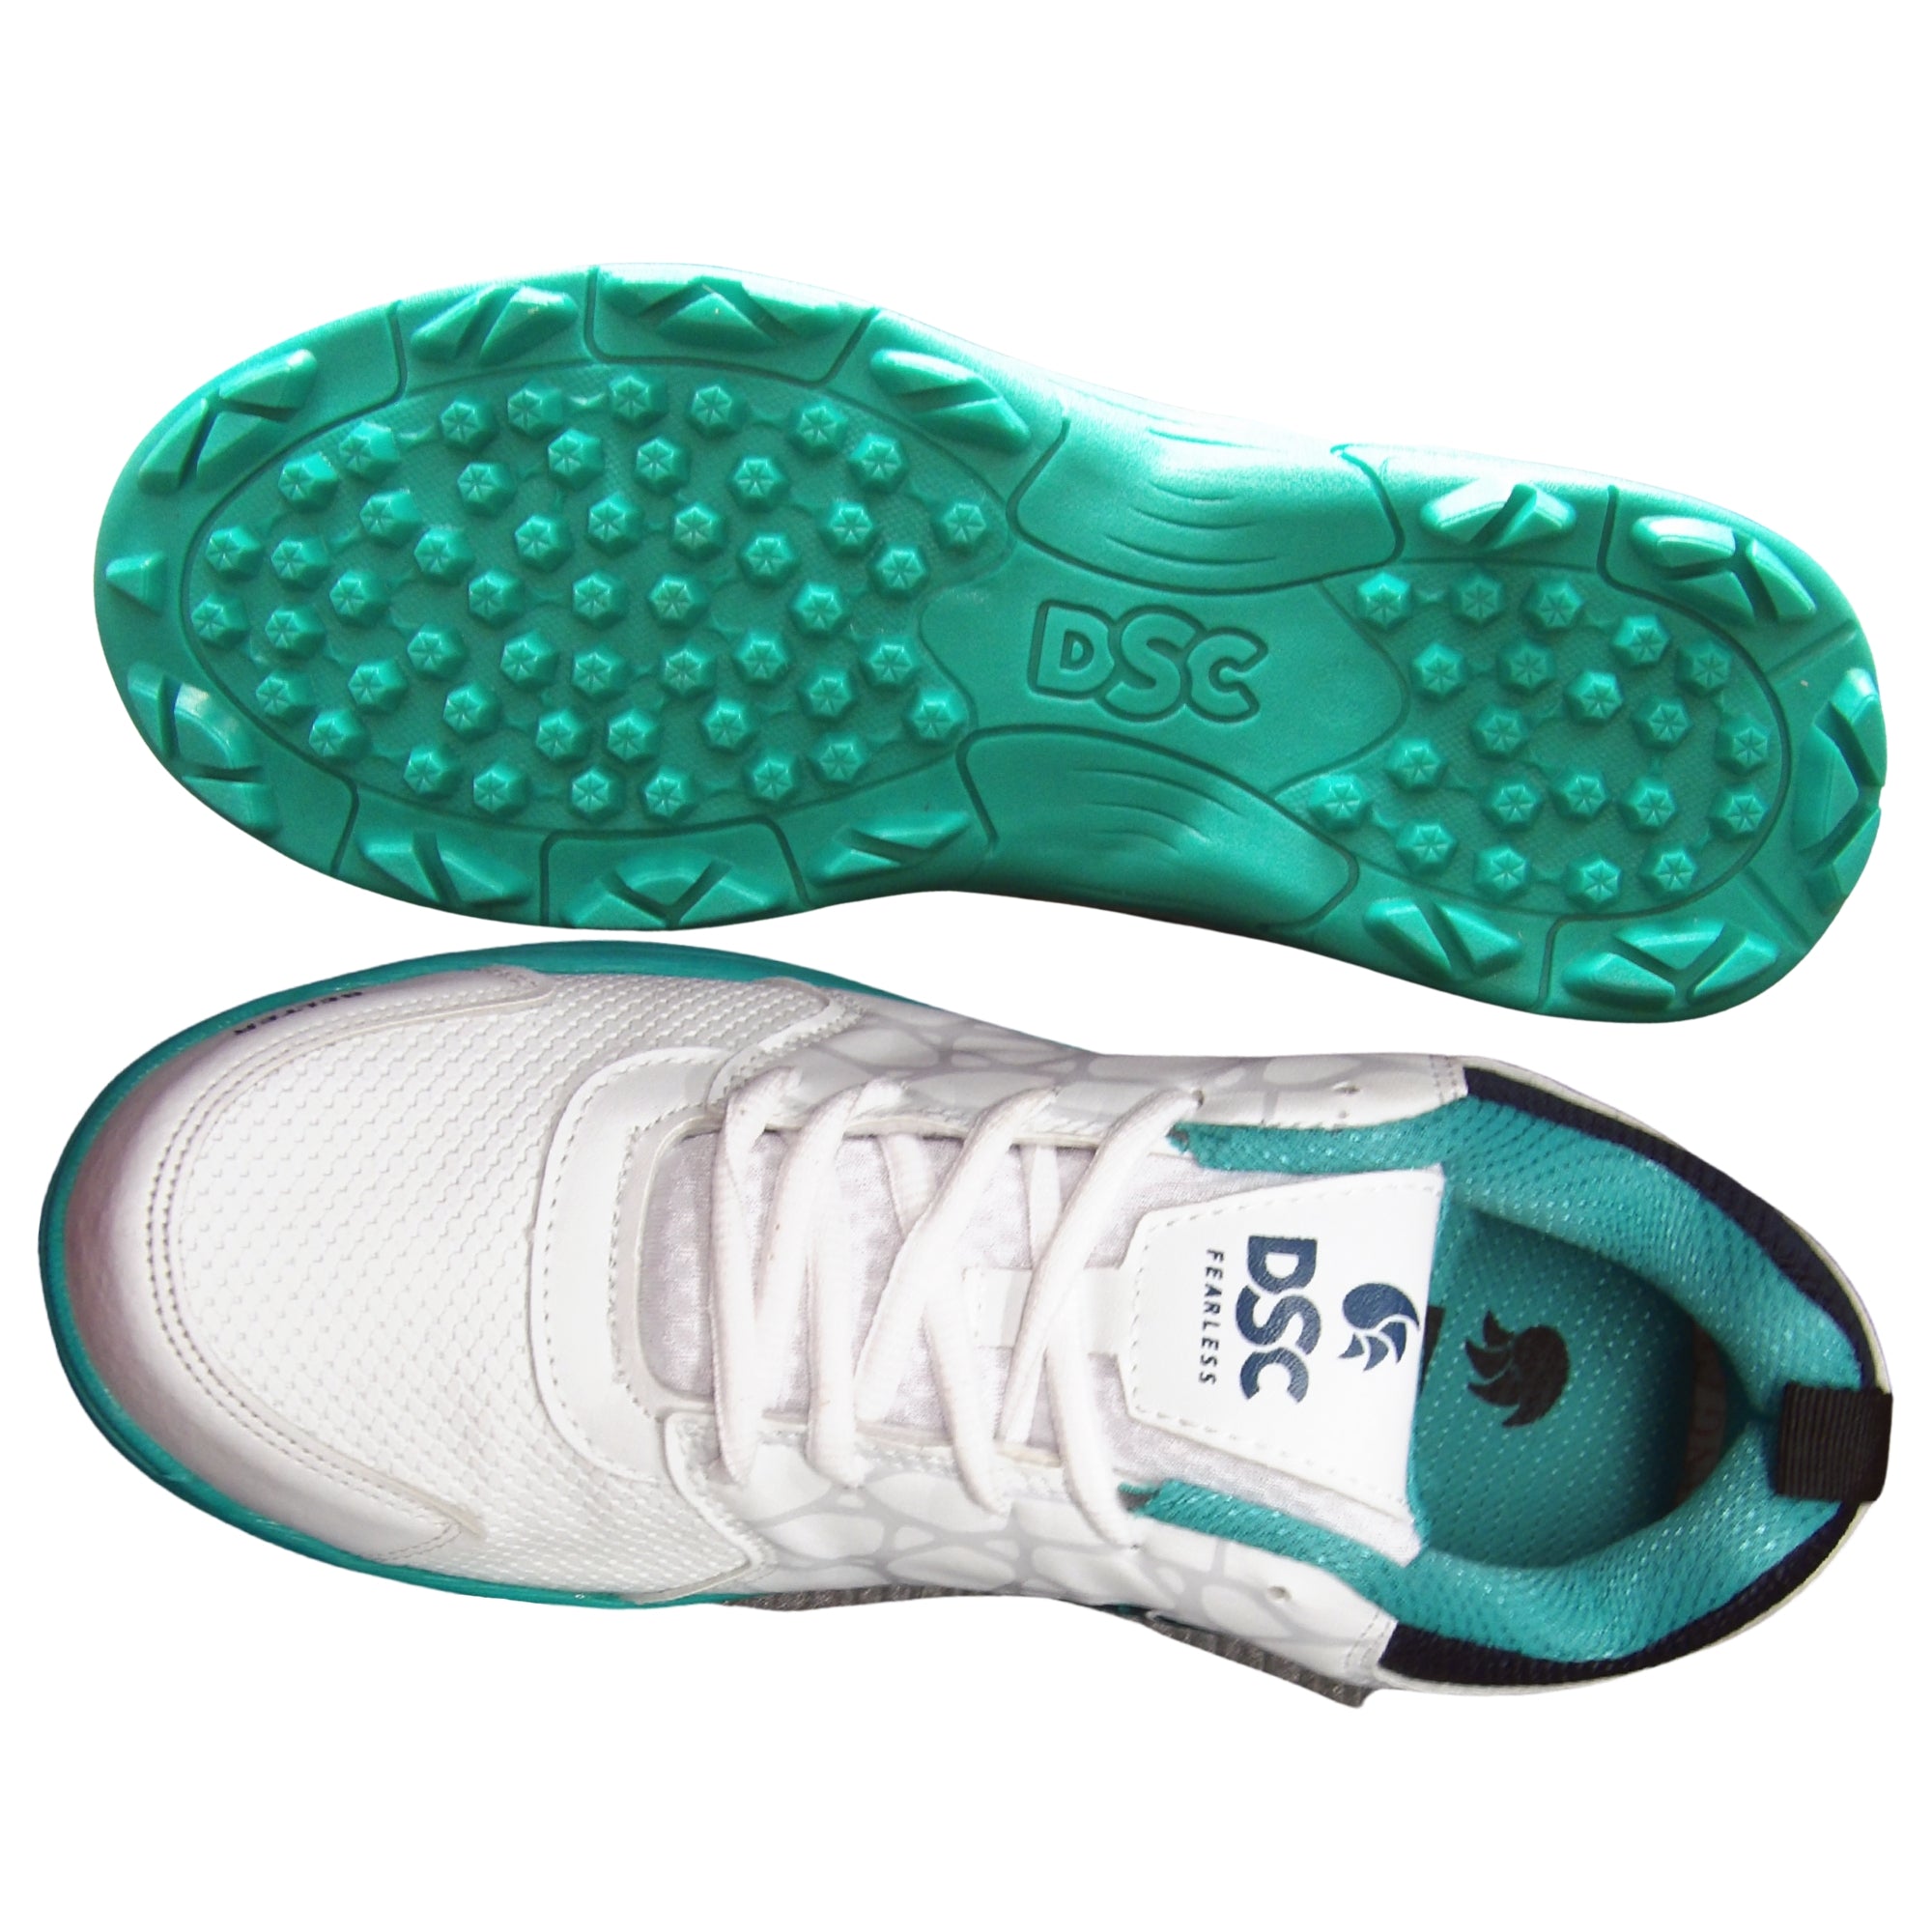 DSC Cricket Shoes, Model Belter - Seagreen/White